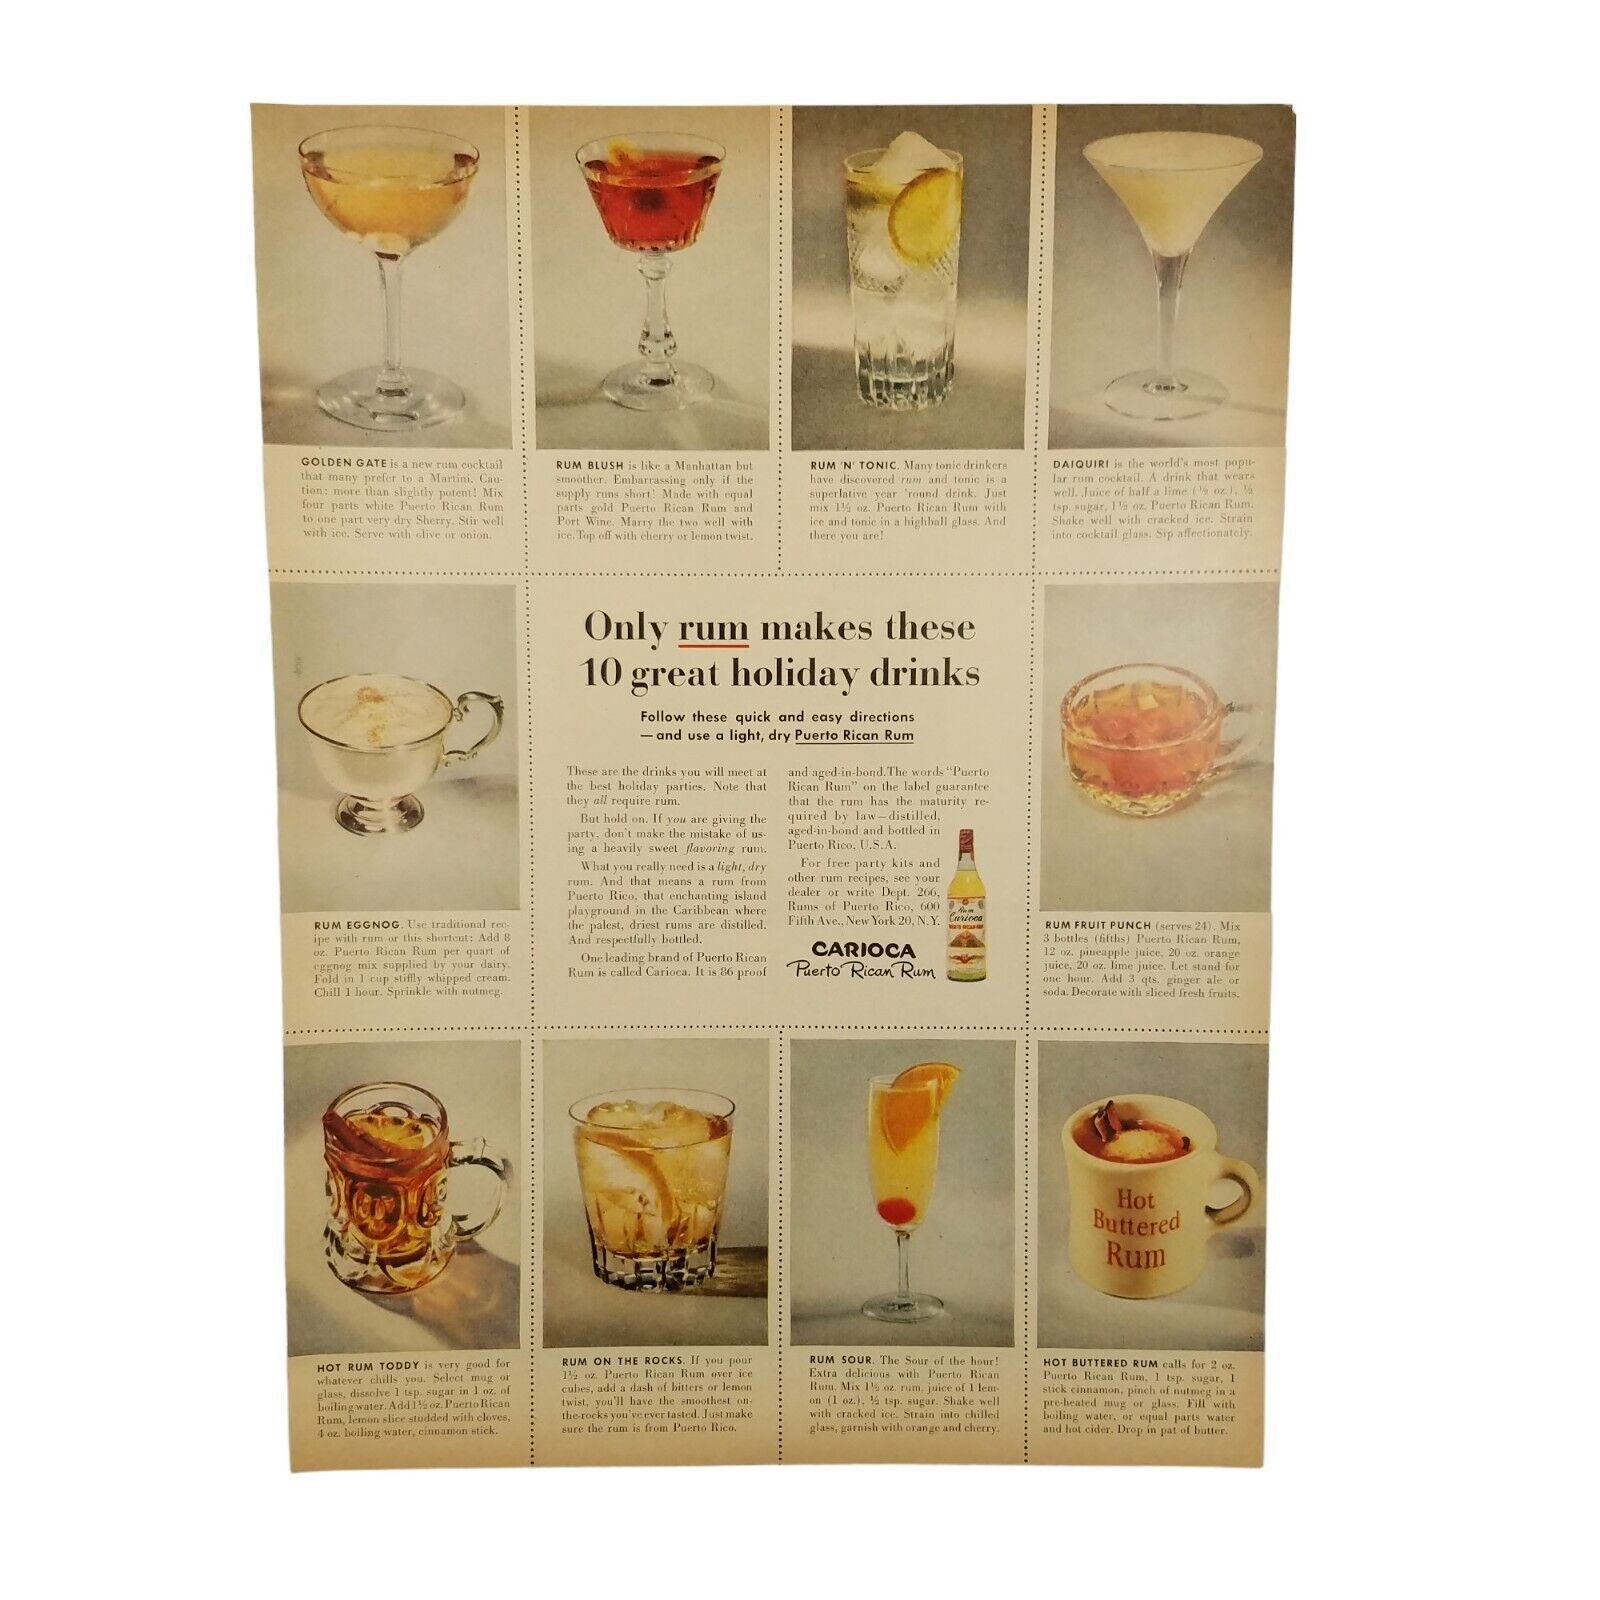 1953 Carioca Puerto Rican Rum Vintage Print Ad 10 Great Holiday Drinks Recipes